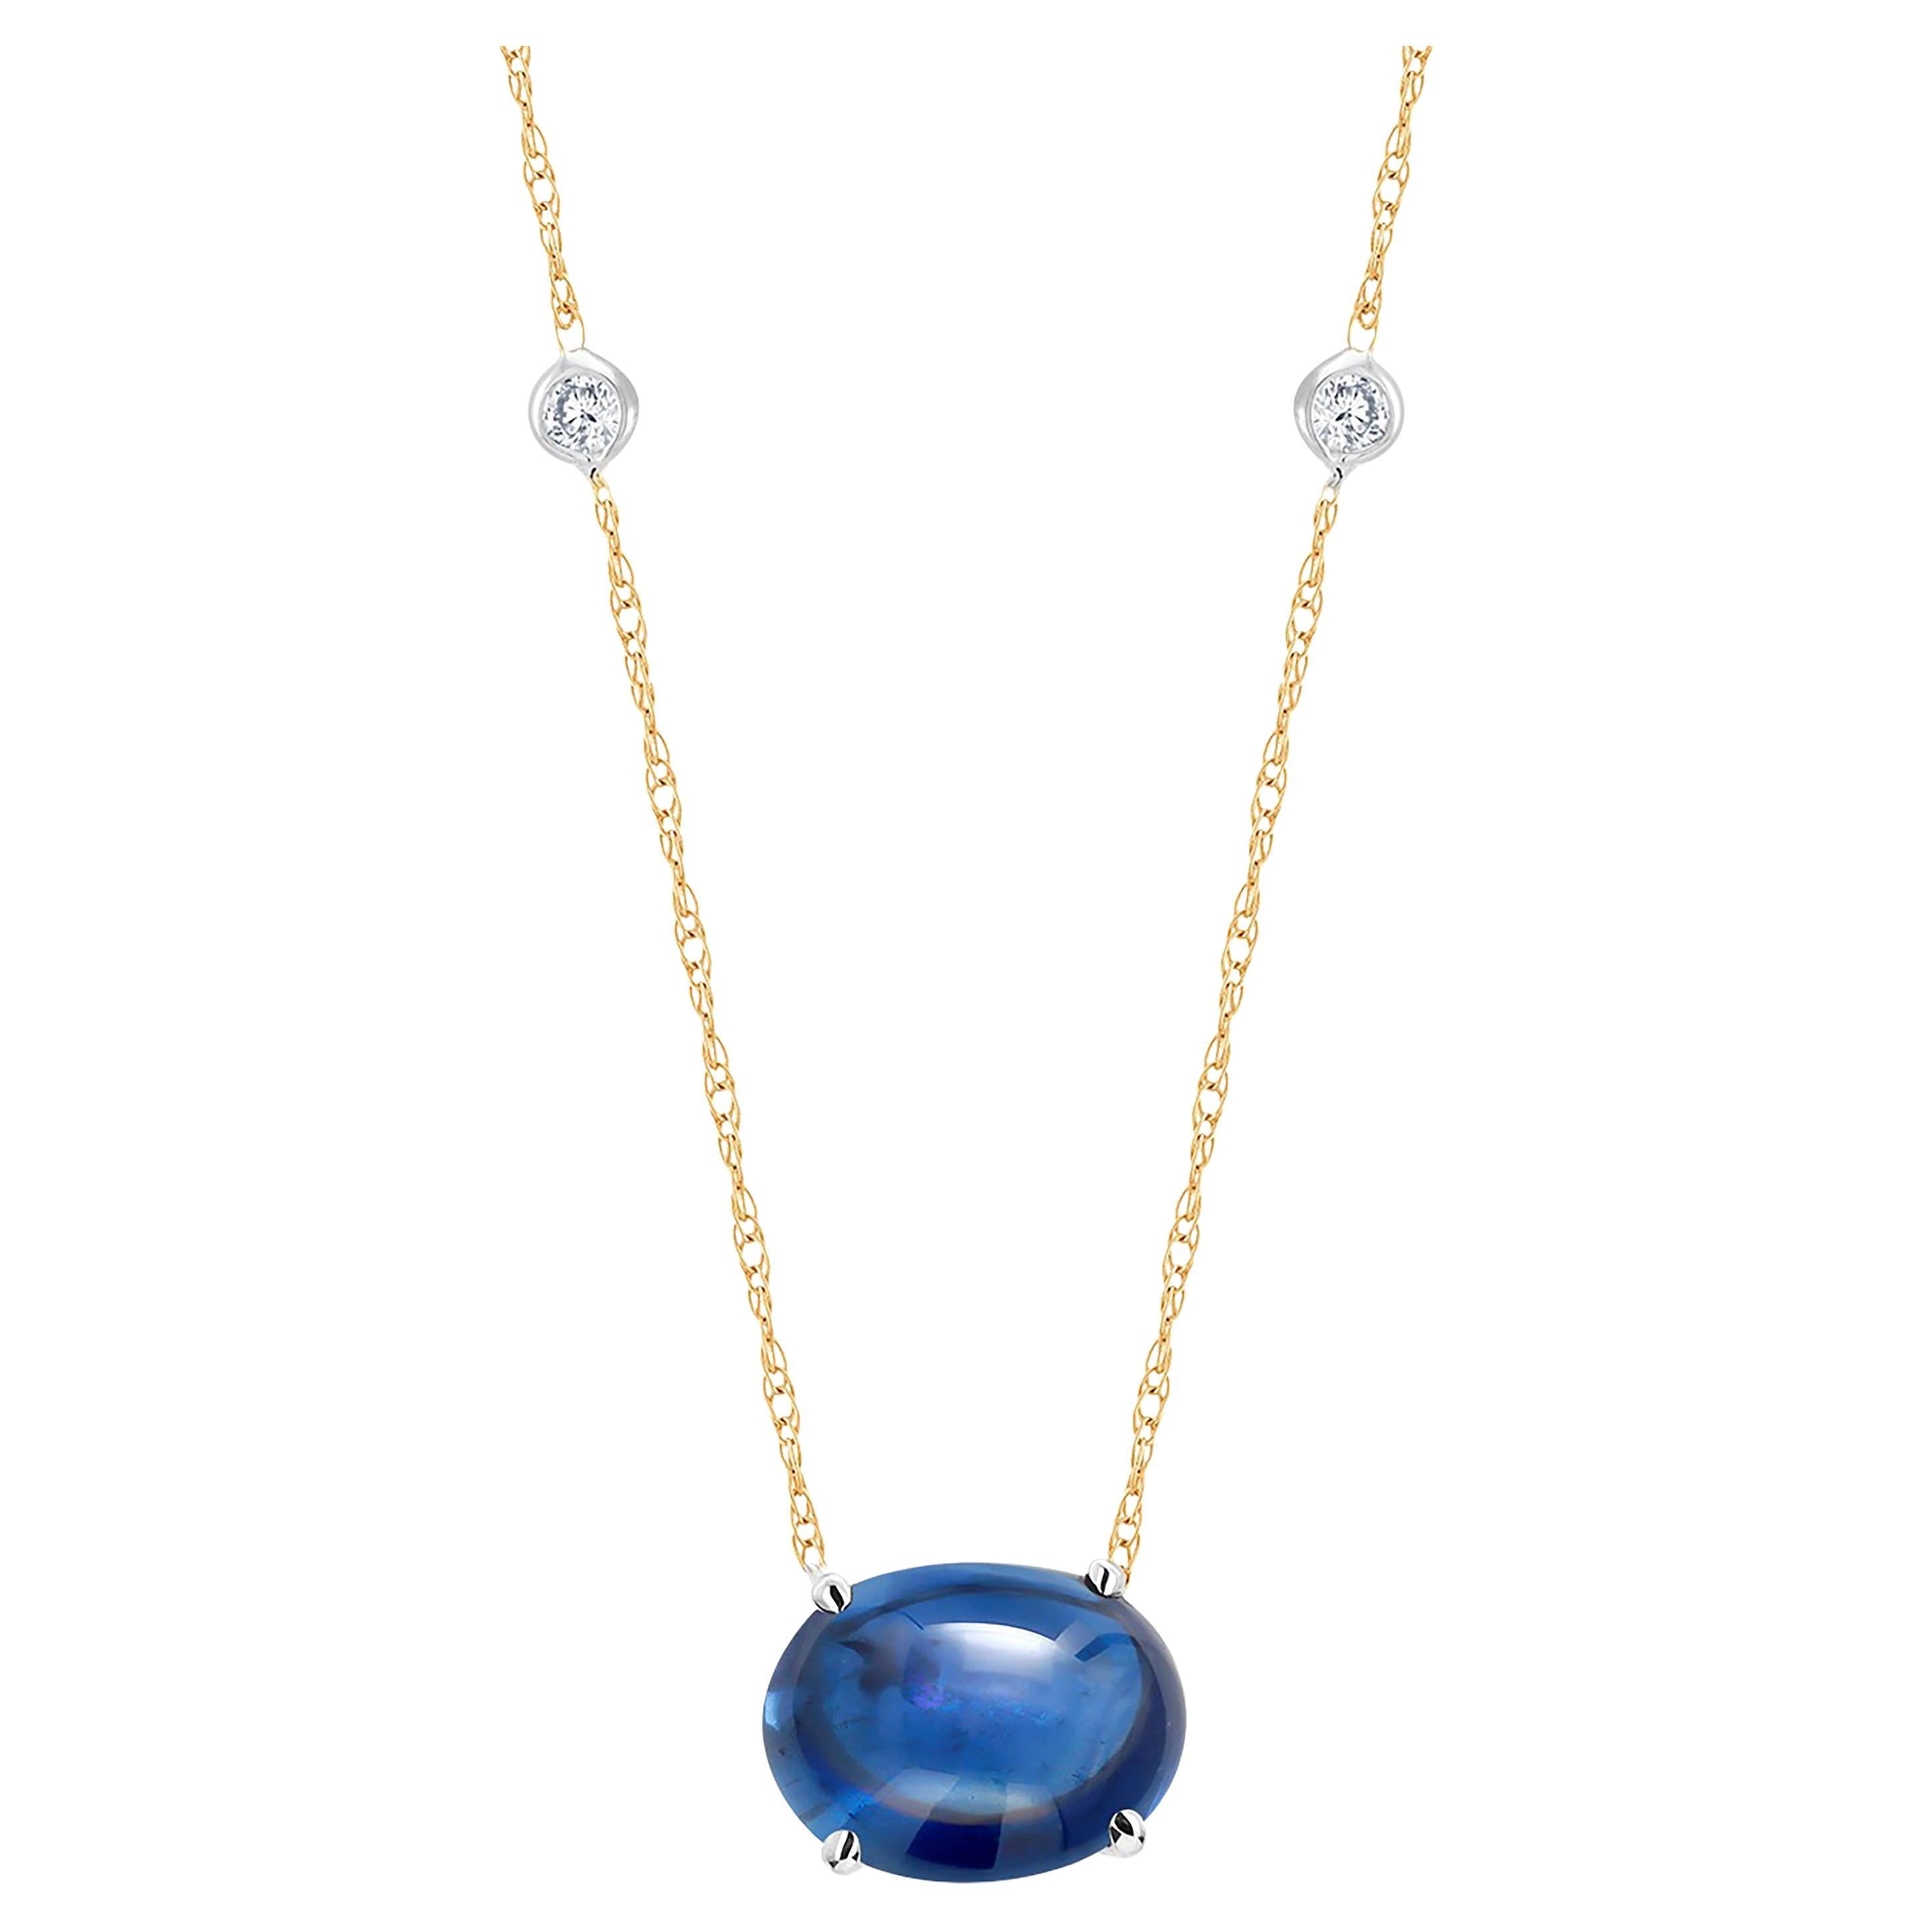 Cabochon Sapphire and Diamonds Set in Bezel Gold Necklace Pendant